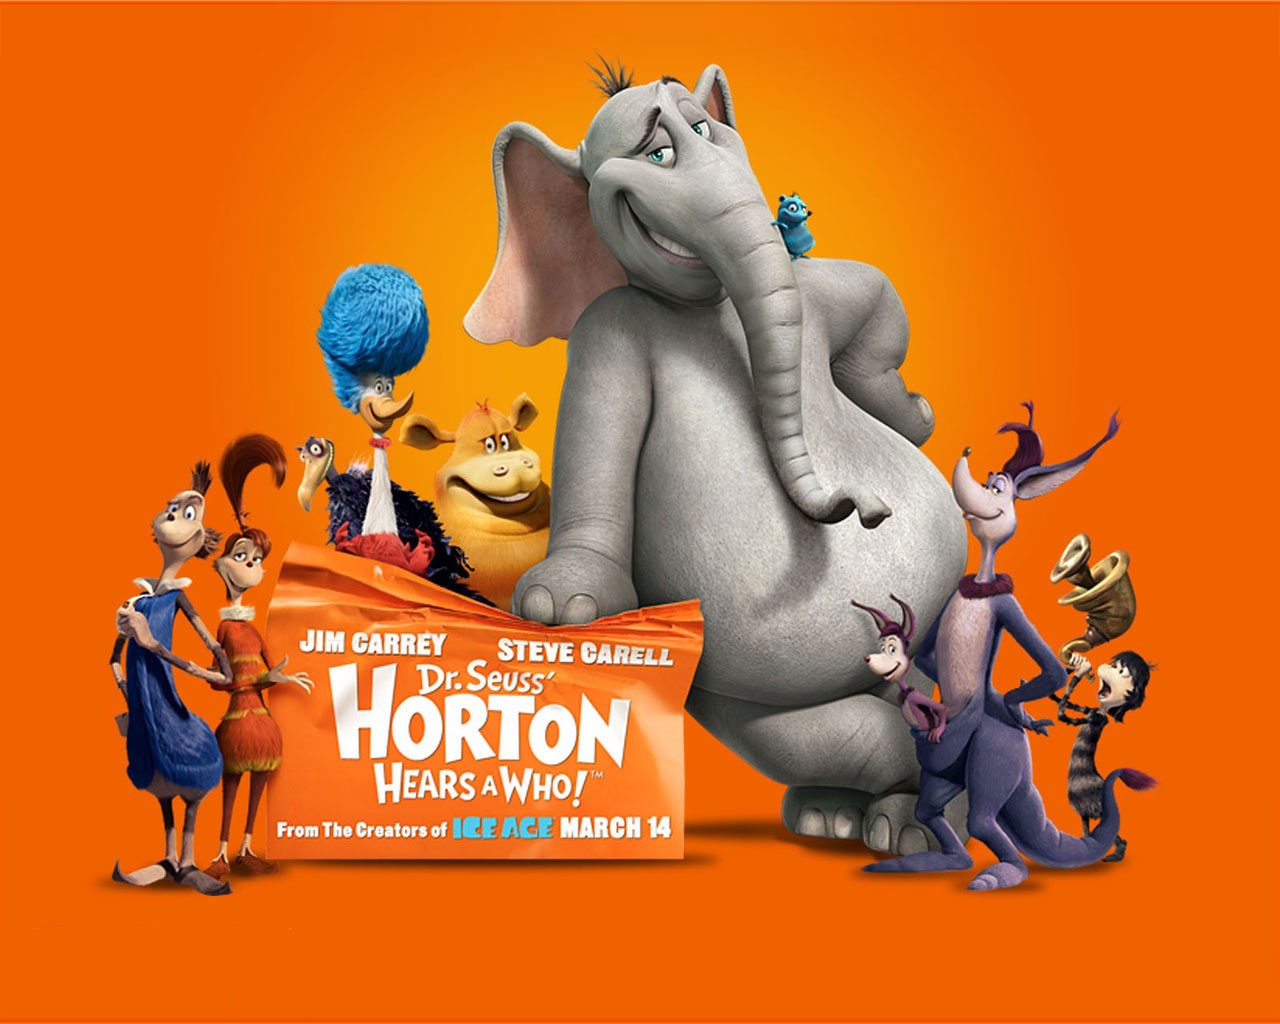 "Dr. Seuss' Horton Hears a Who!" desktop wallpaper (1280 x 1024 pixels)